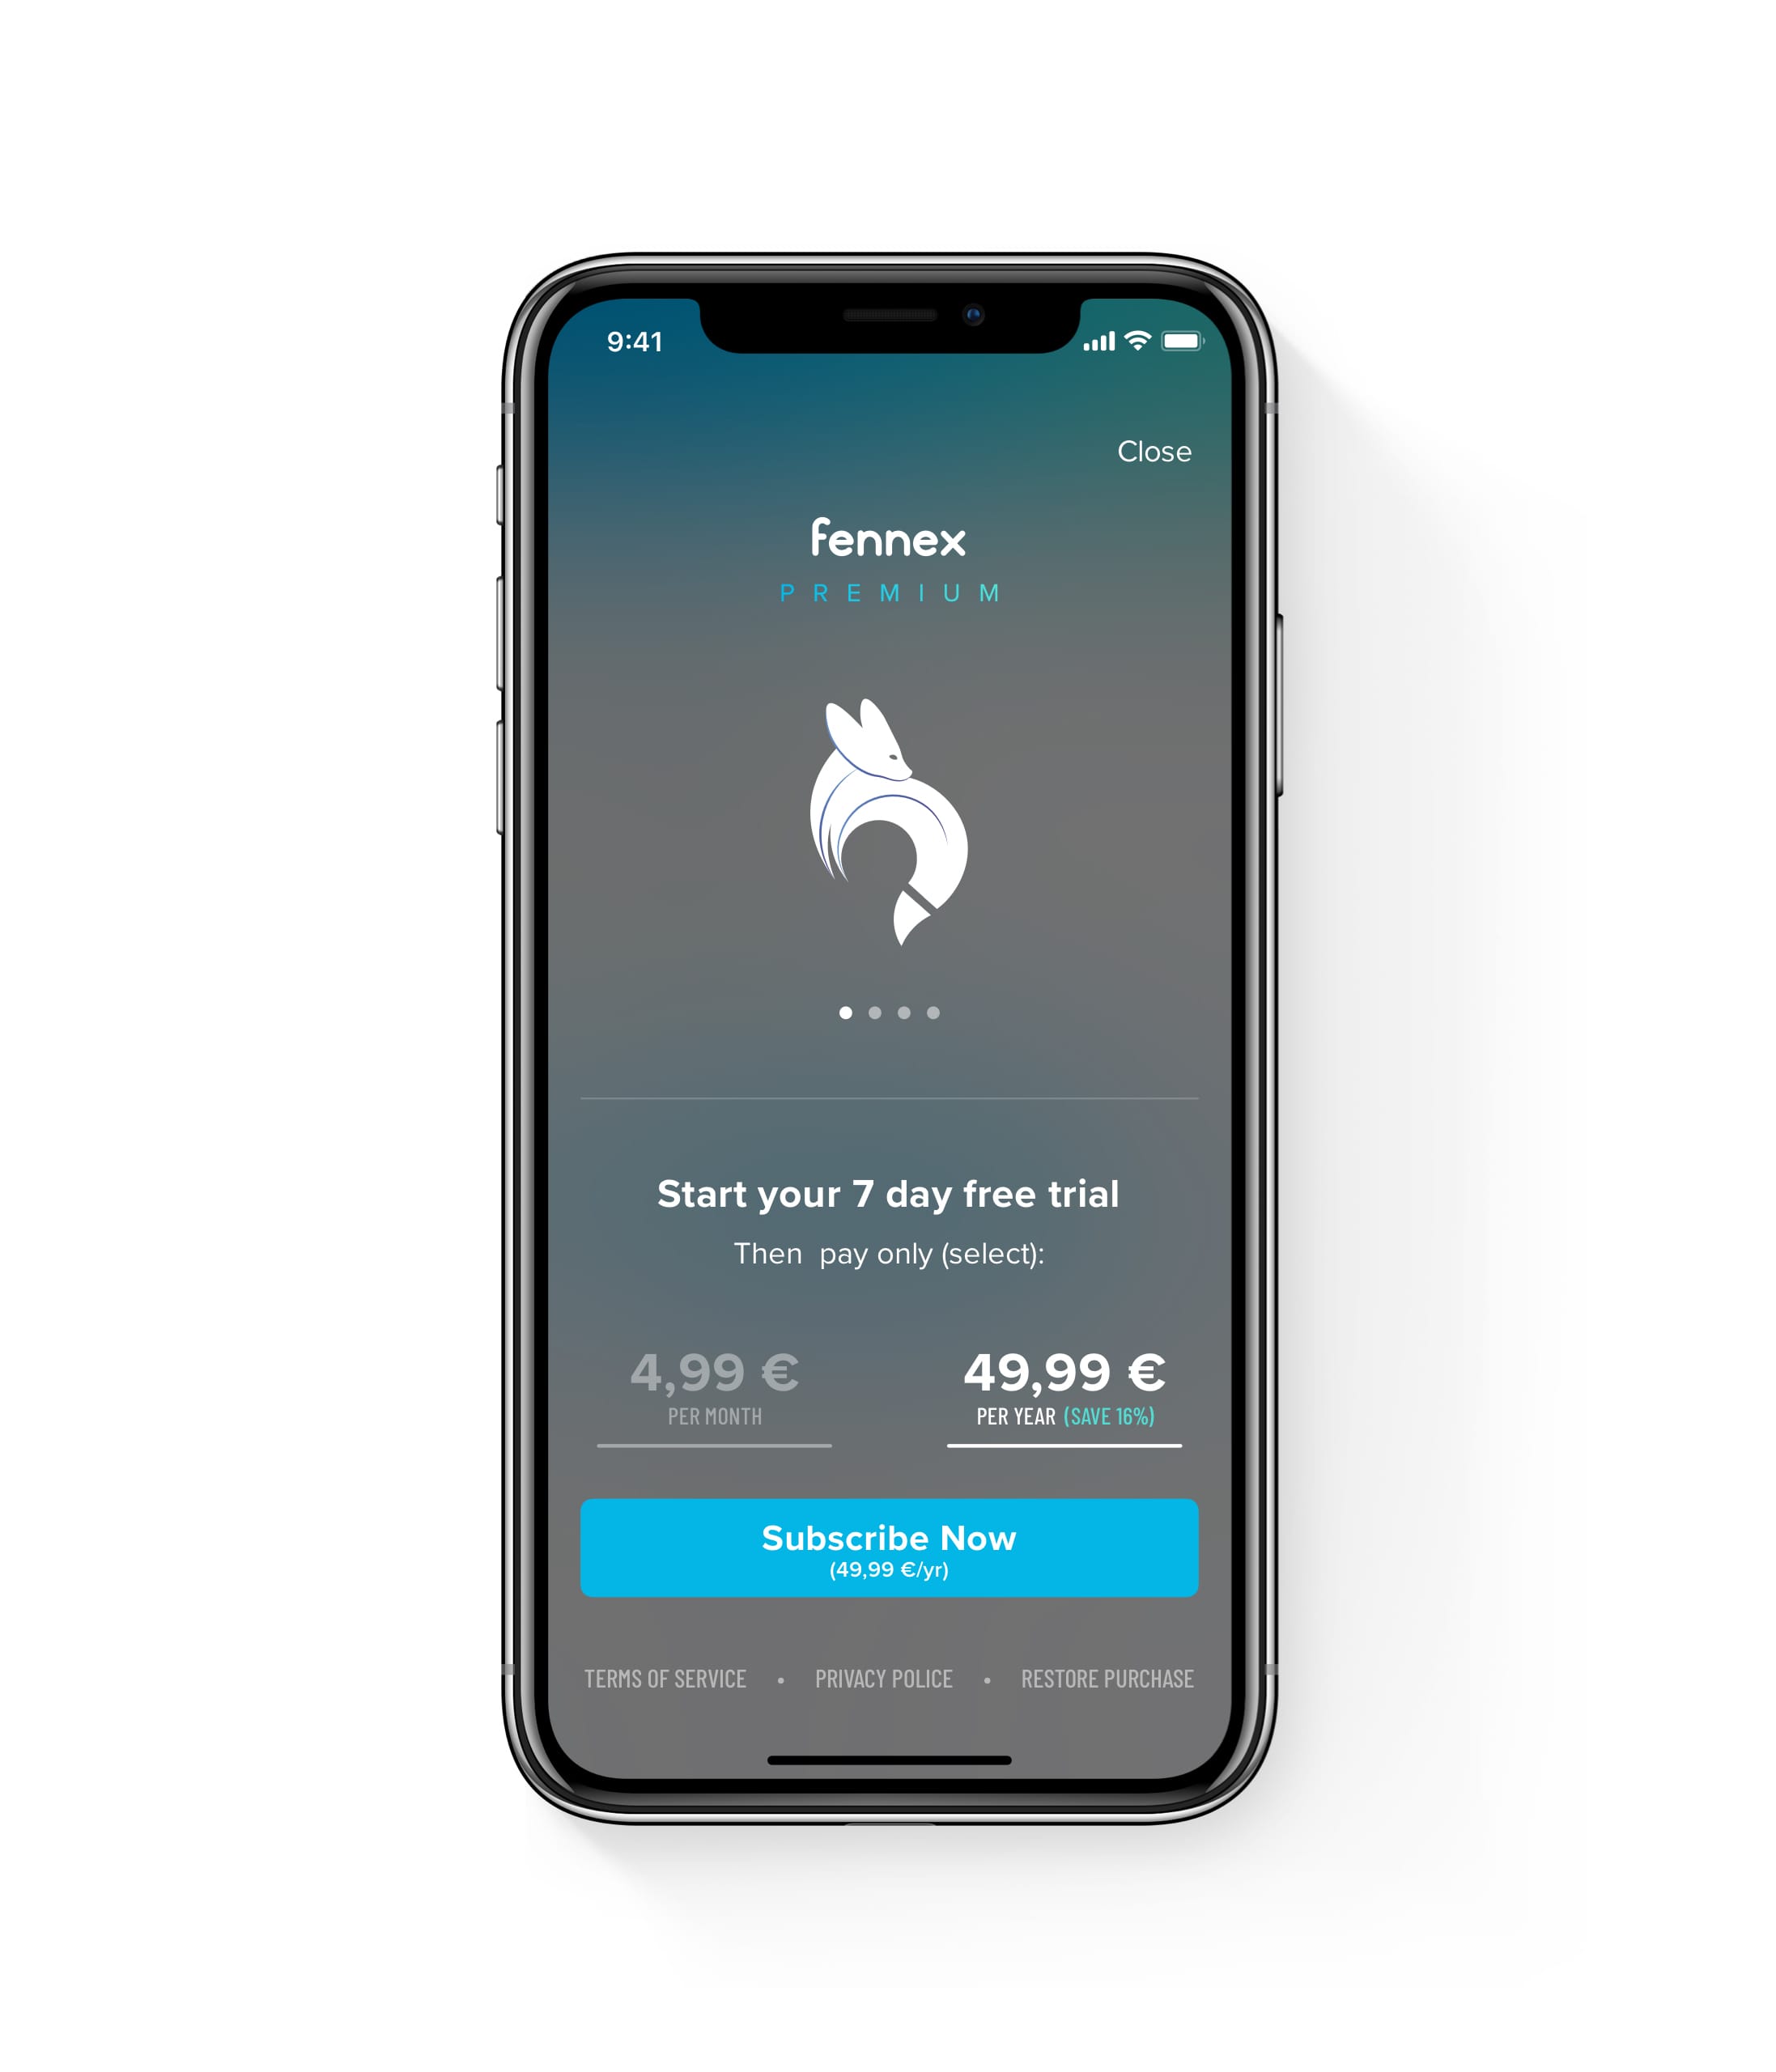 Fennex app UI subscription interface